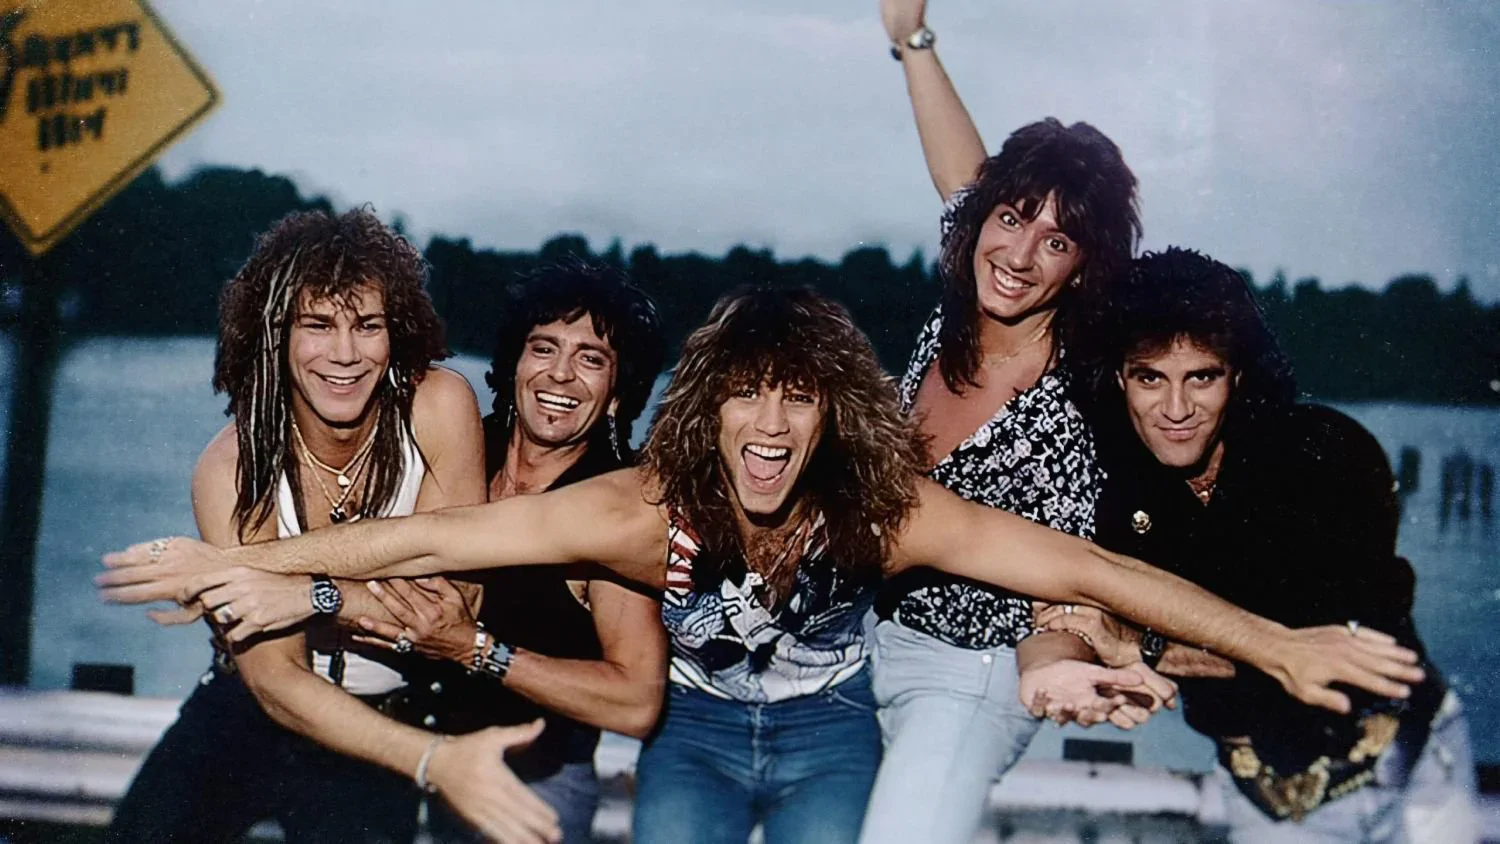 Thank You Good Night : Historia Bon Jovi - recenzja dokumentu na Disney+